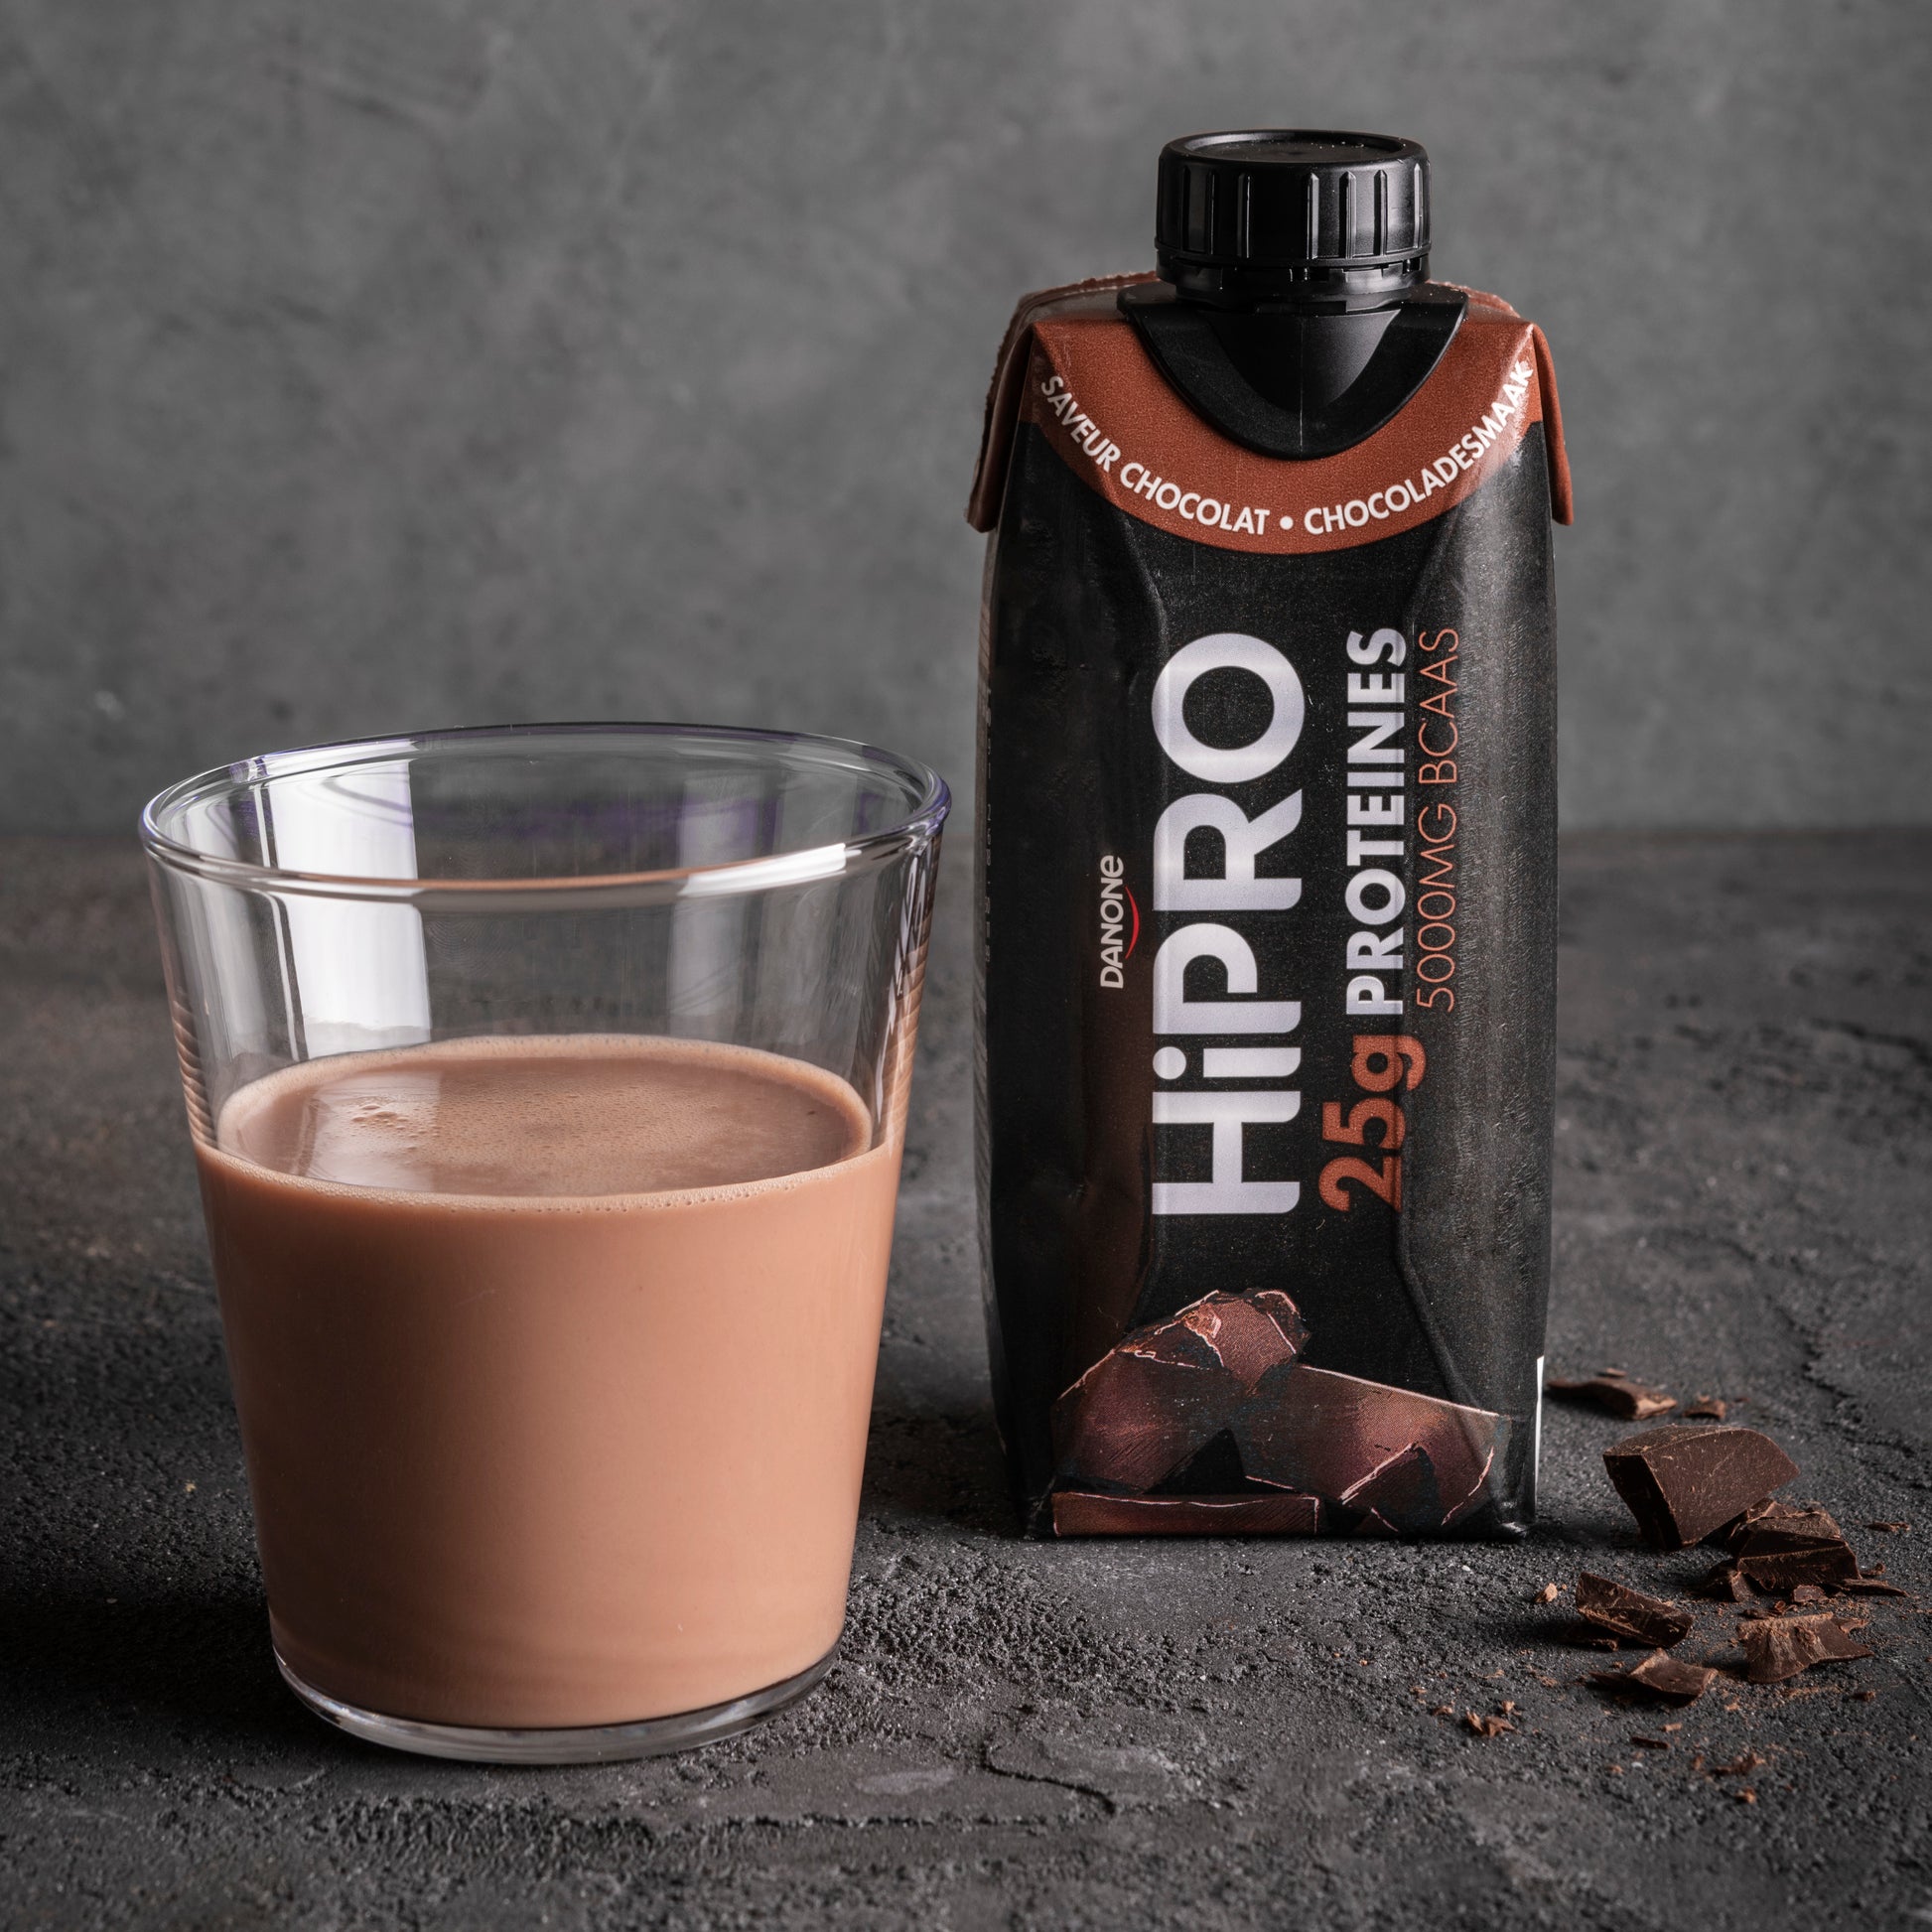 HiPRO Pudding vanille et chocolat